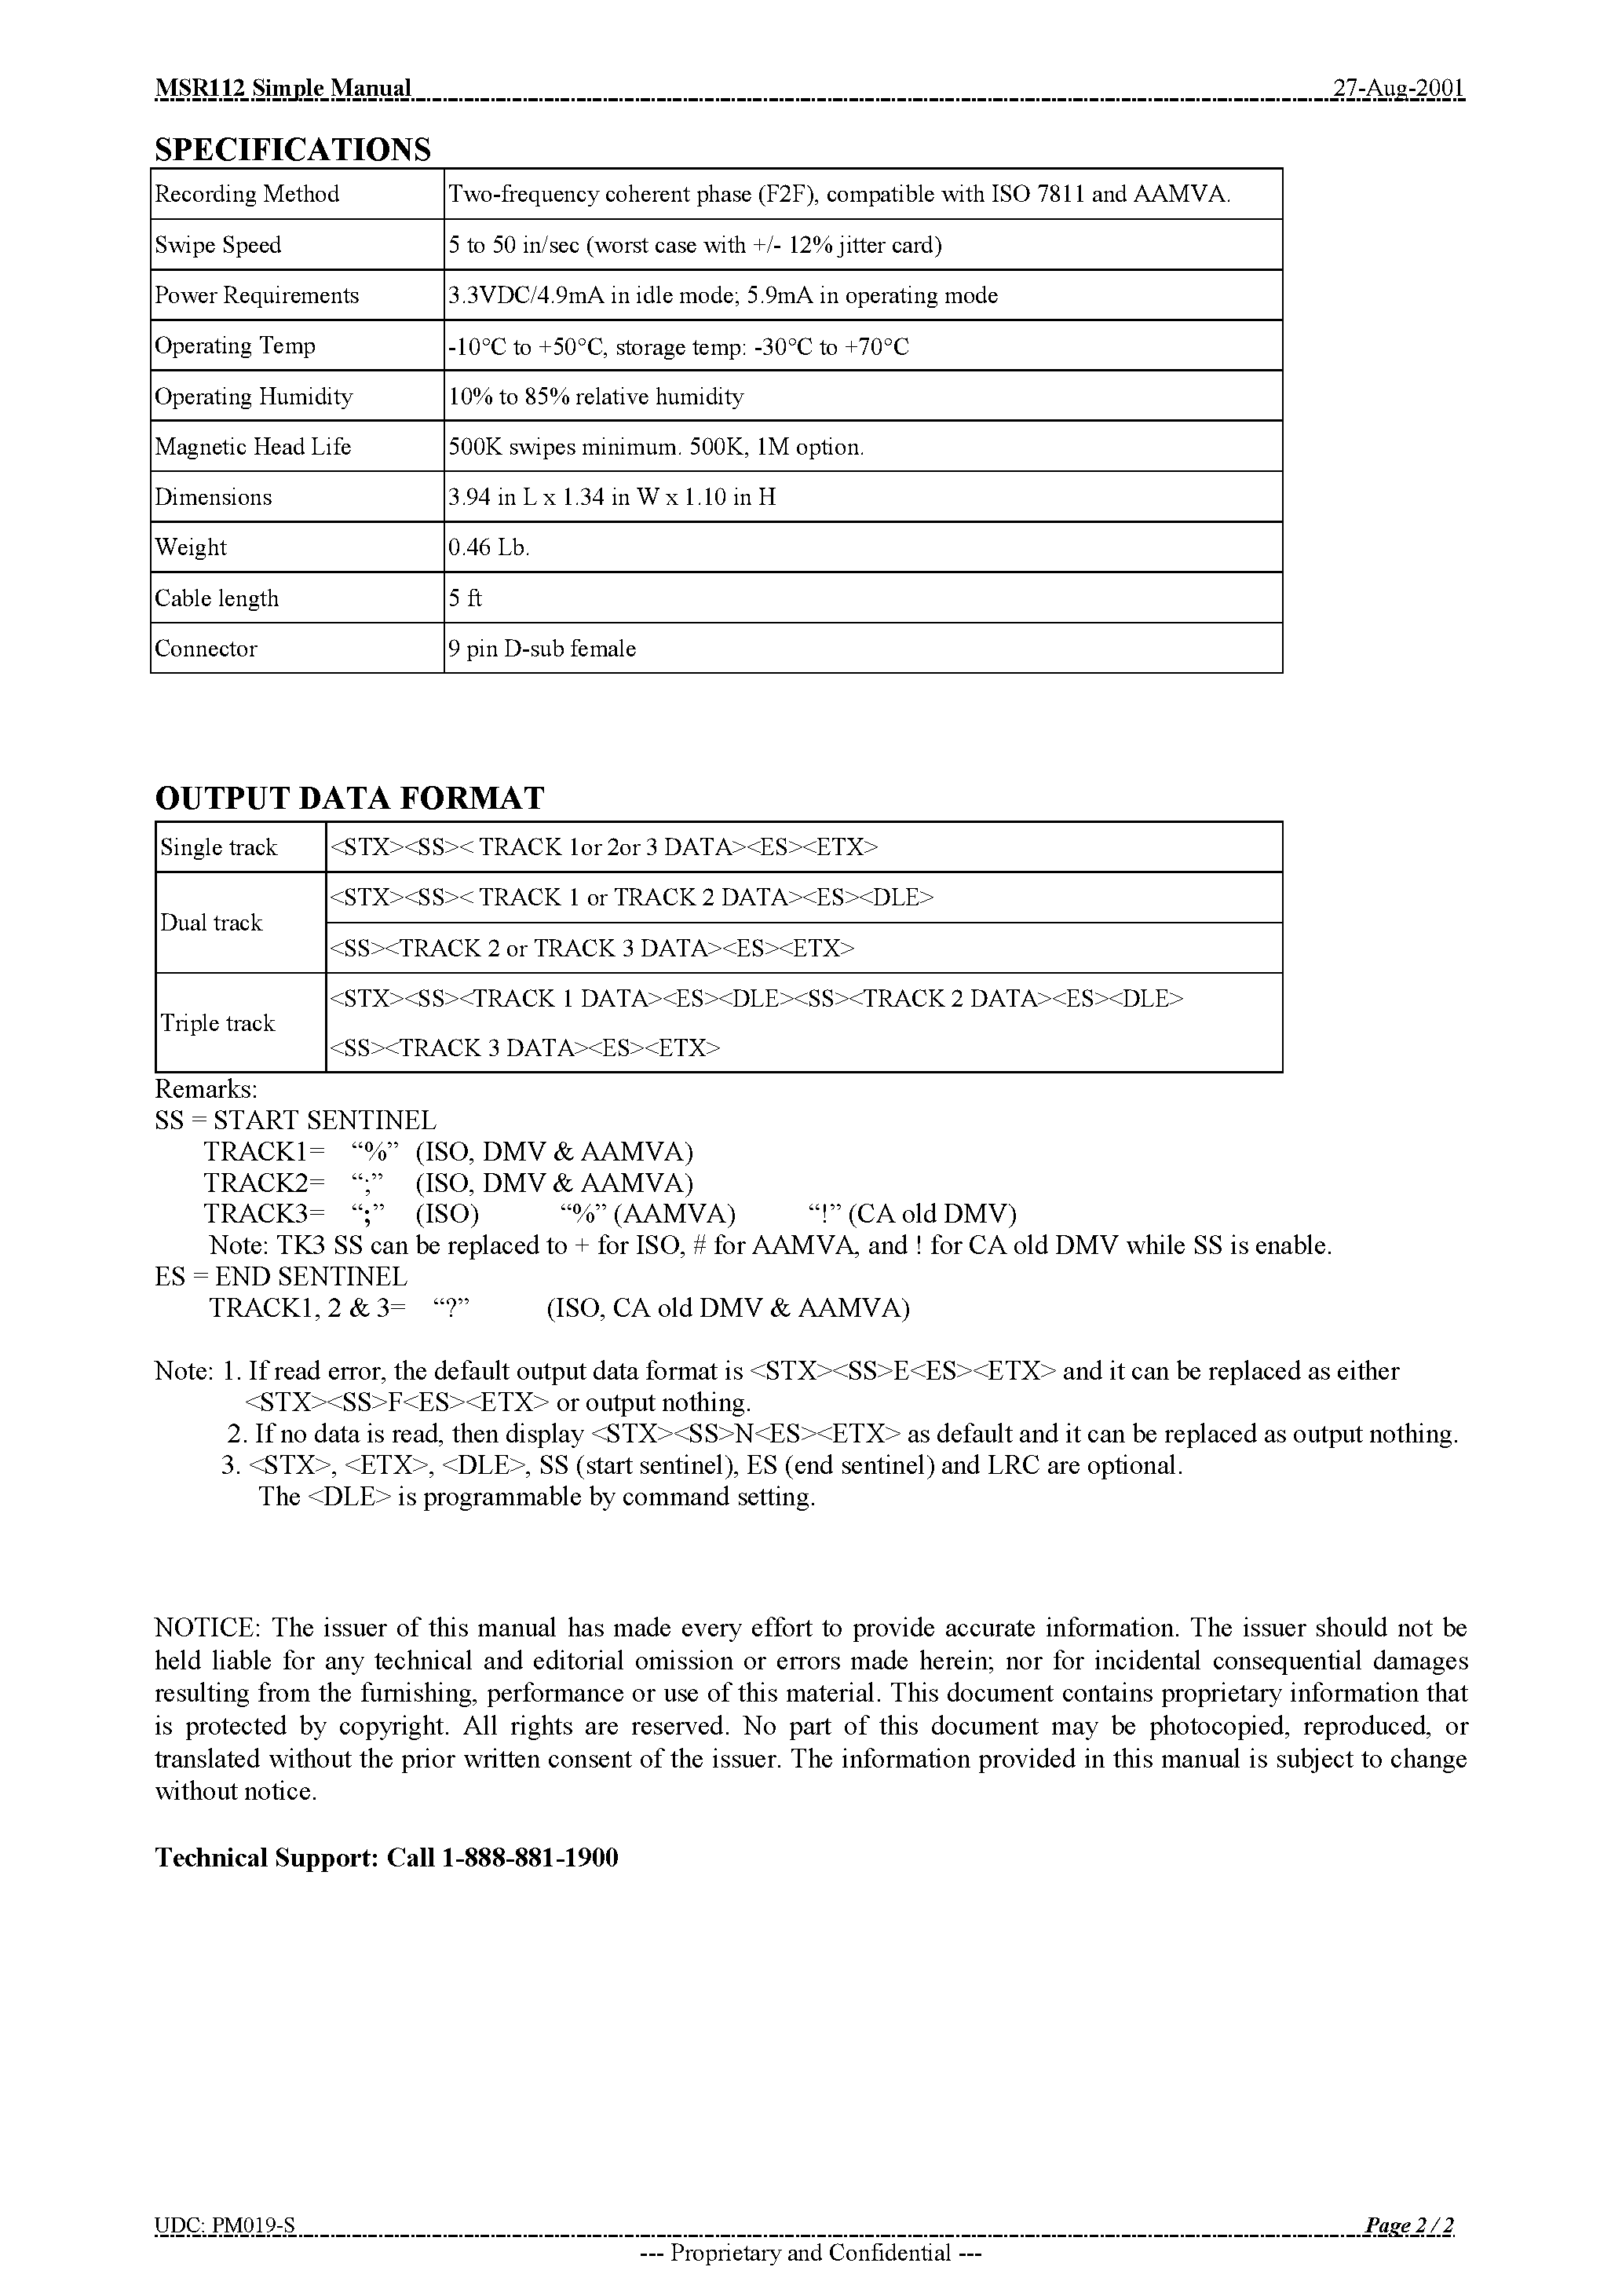 Datasheet MSR112 - Port Powered Magnetic Card Reader page 2